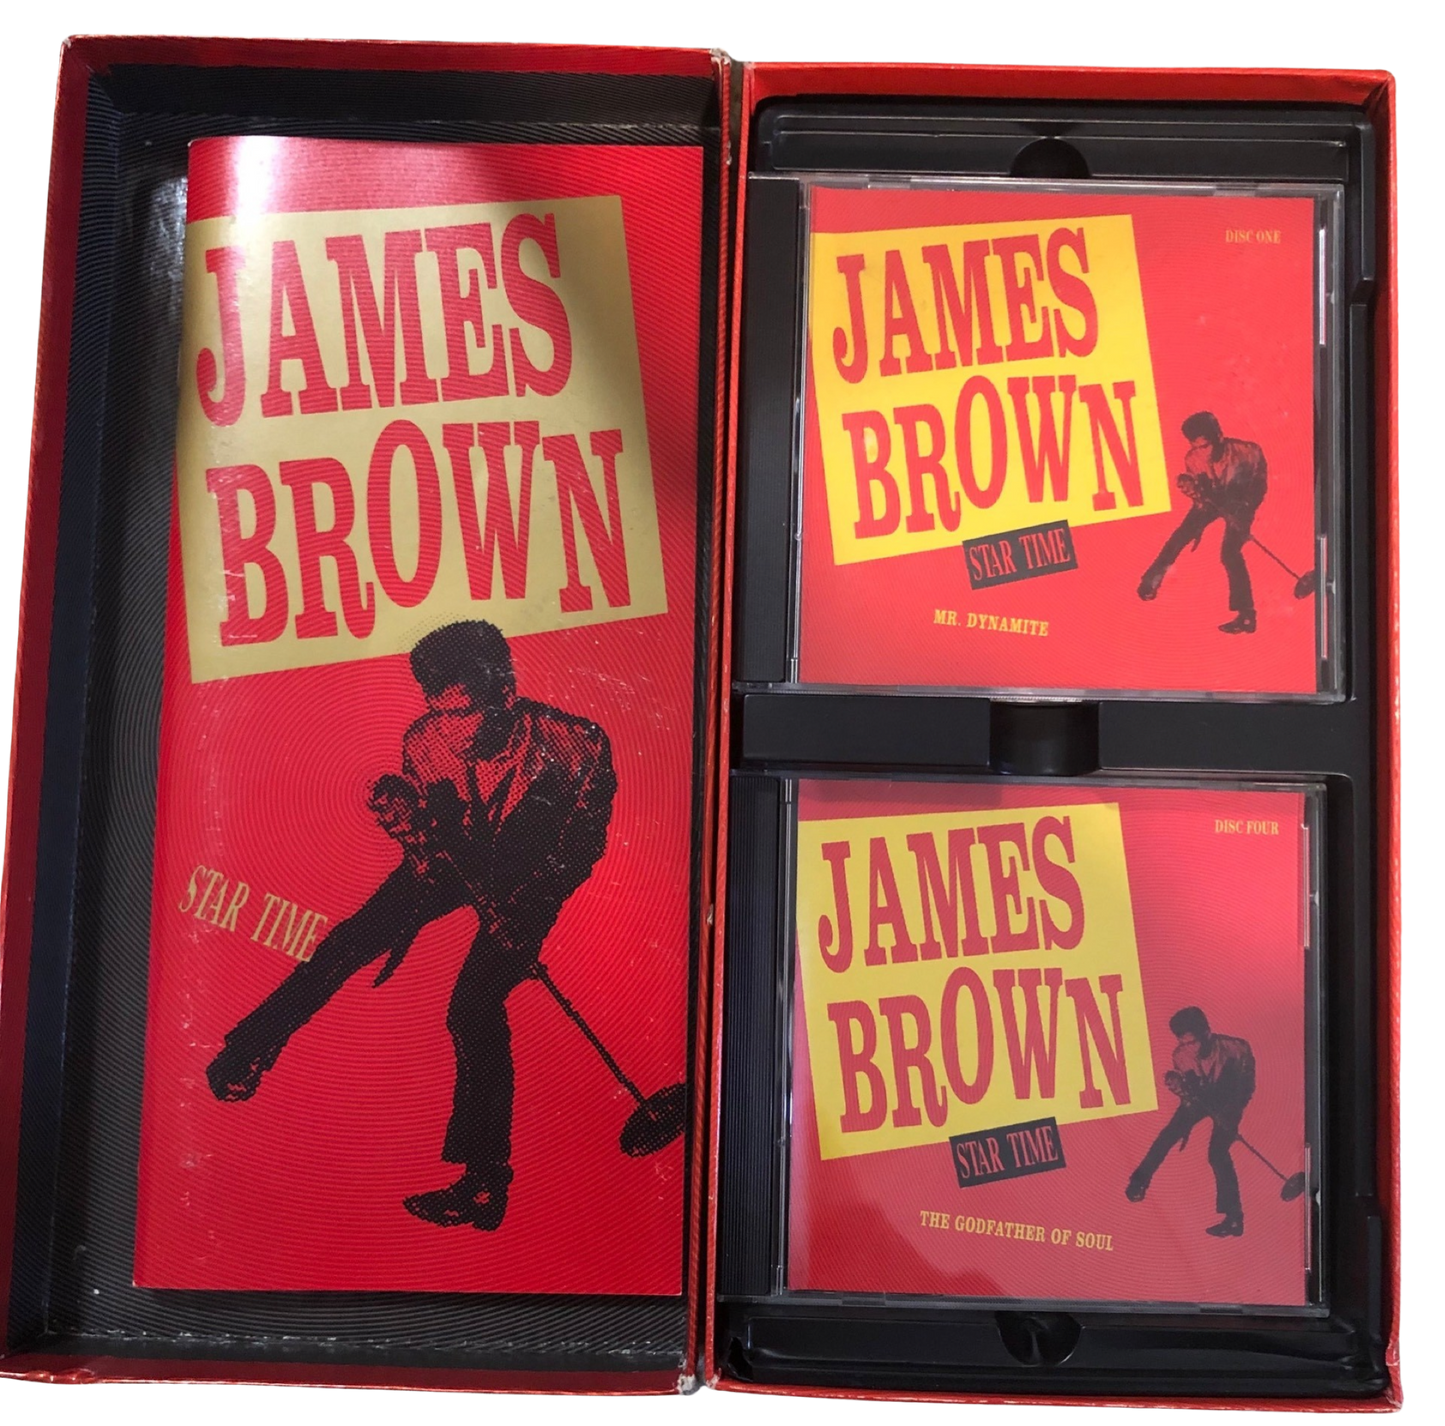 James Brown Star Time – Second Chance Thrift Store - Bridge